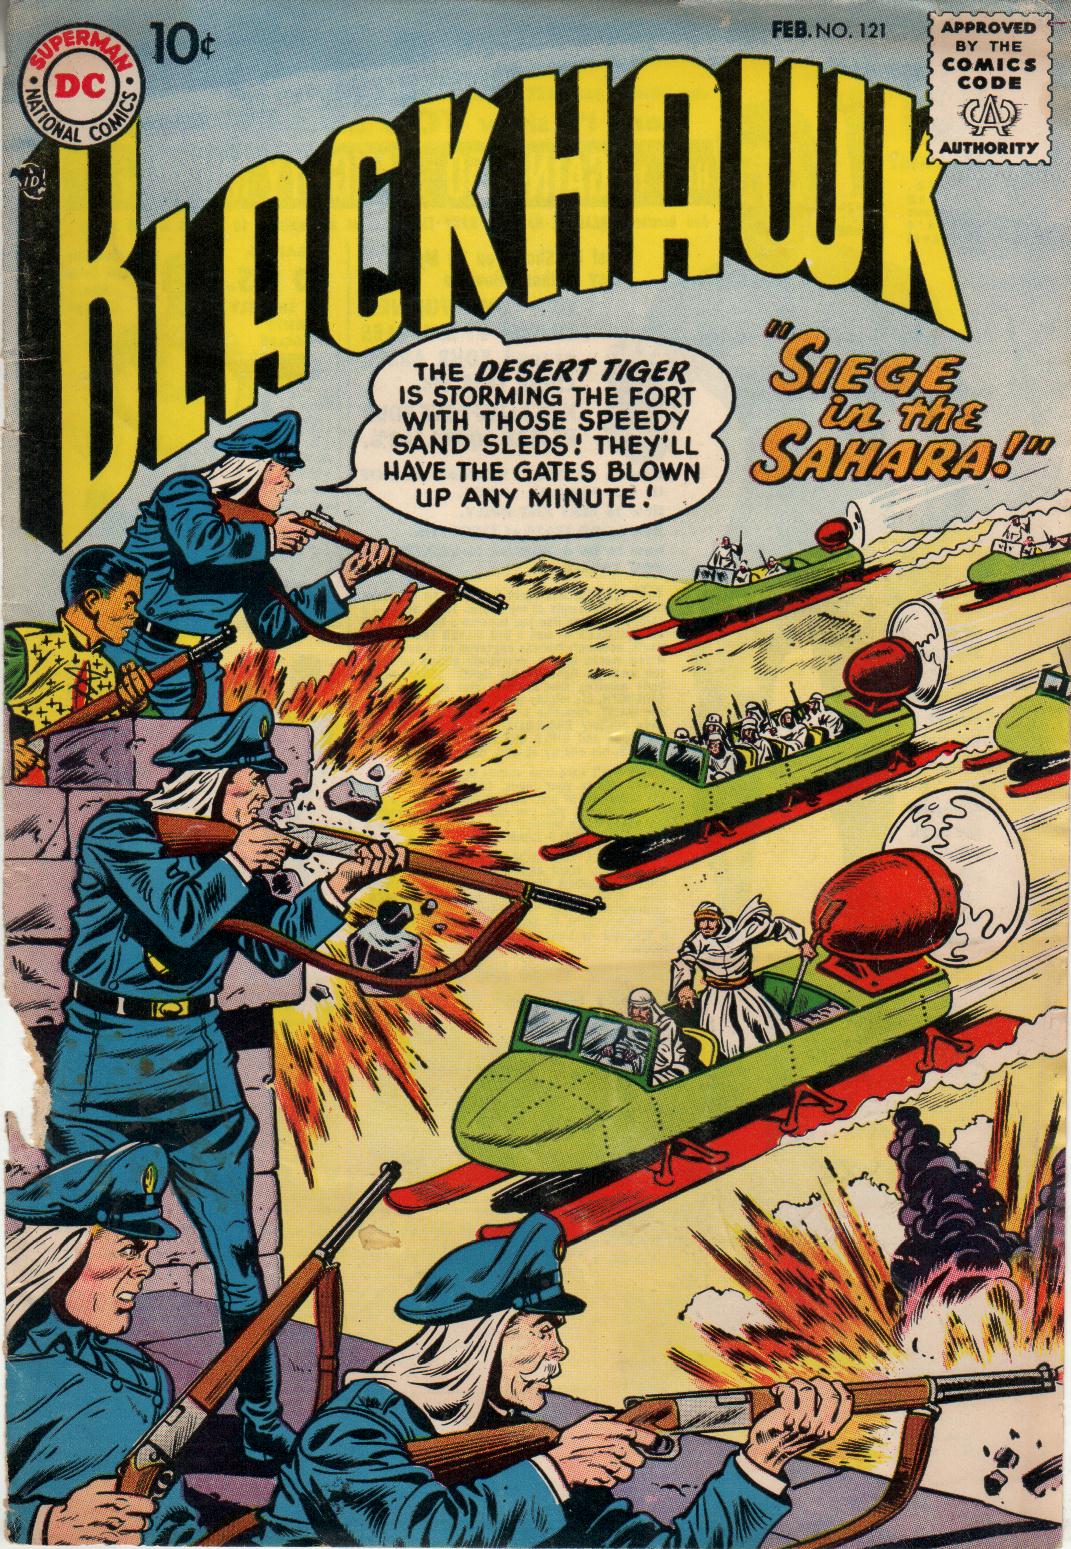 Blackhawk (1957) Issue #121 #14 - English 1